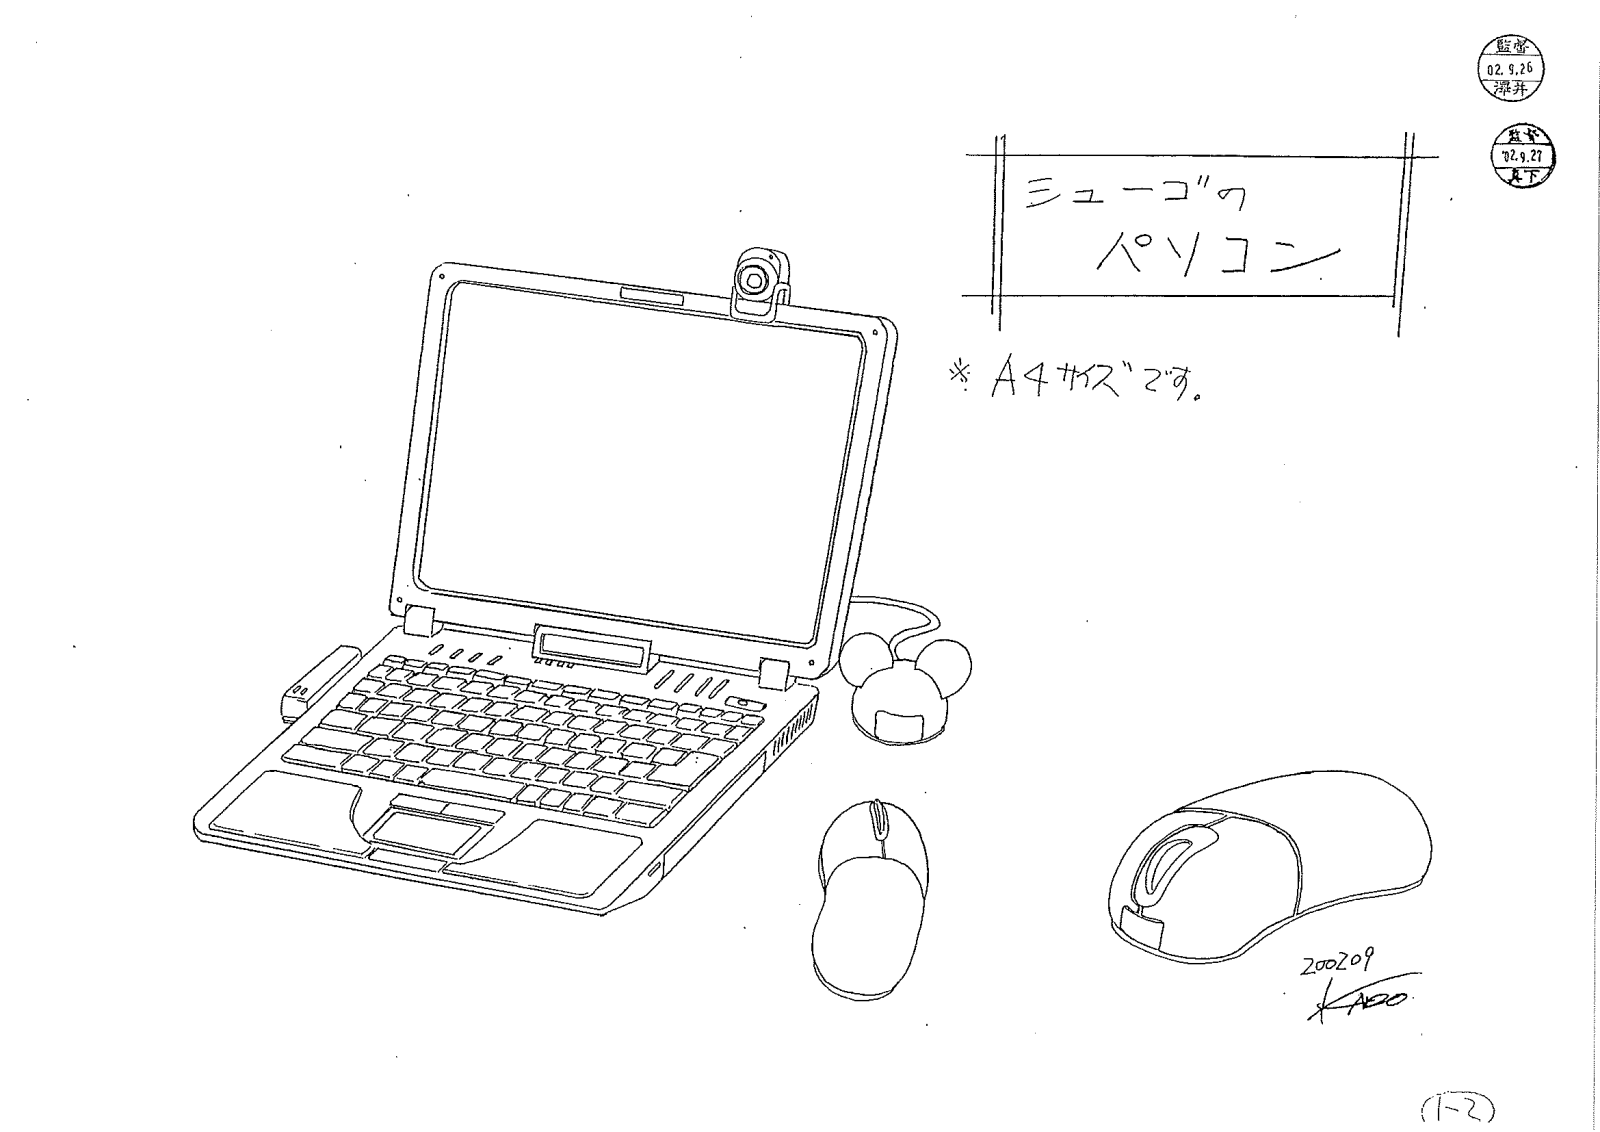 Shugo's Computer